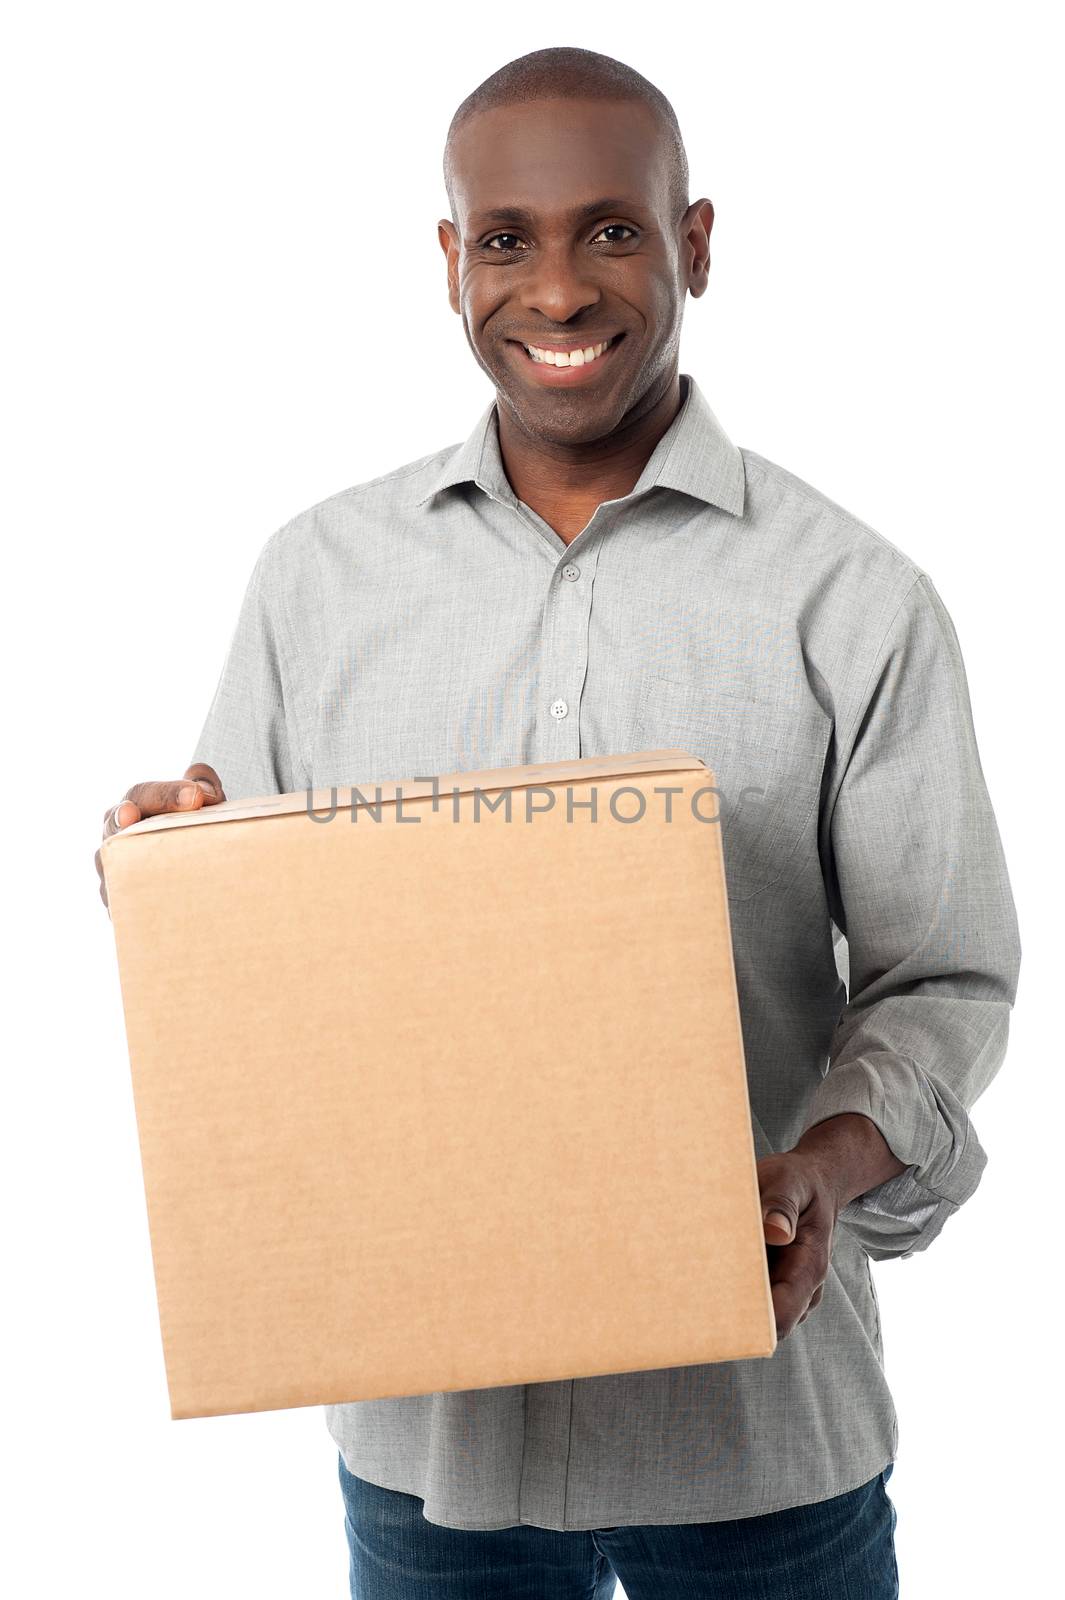 Smiling casual man carrying carton box